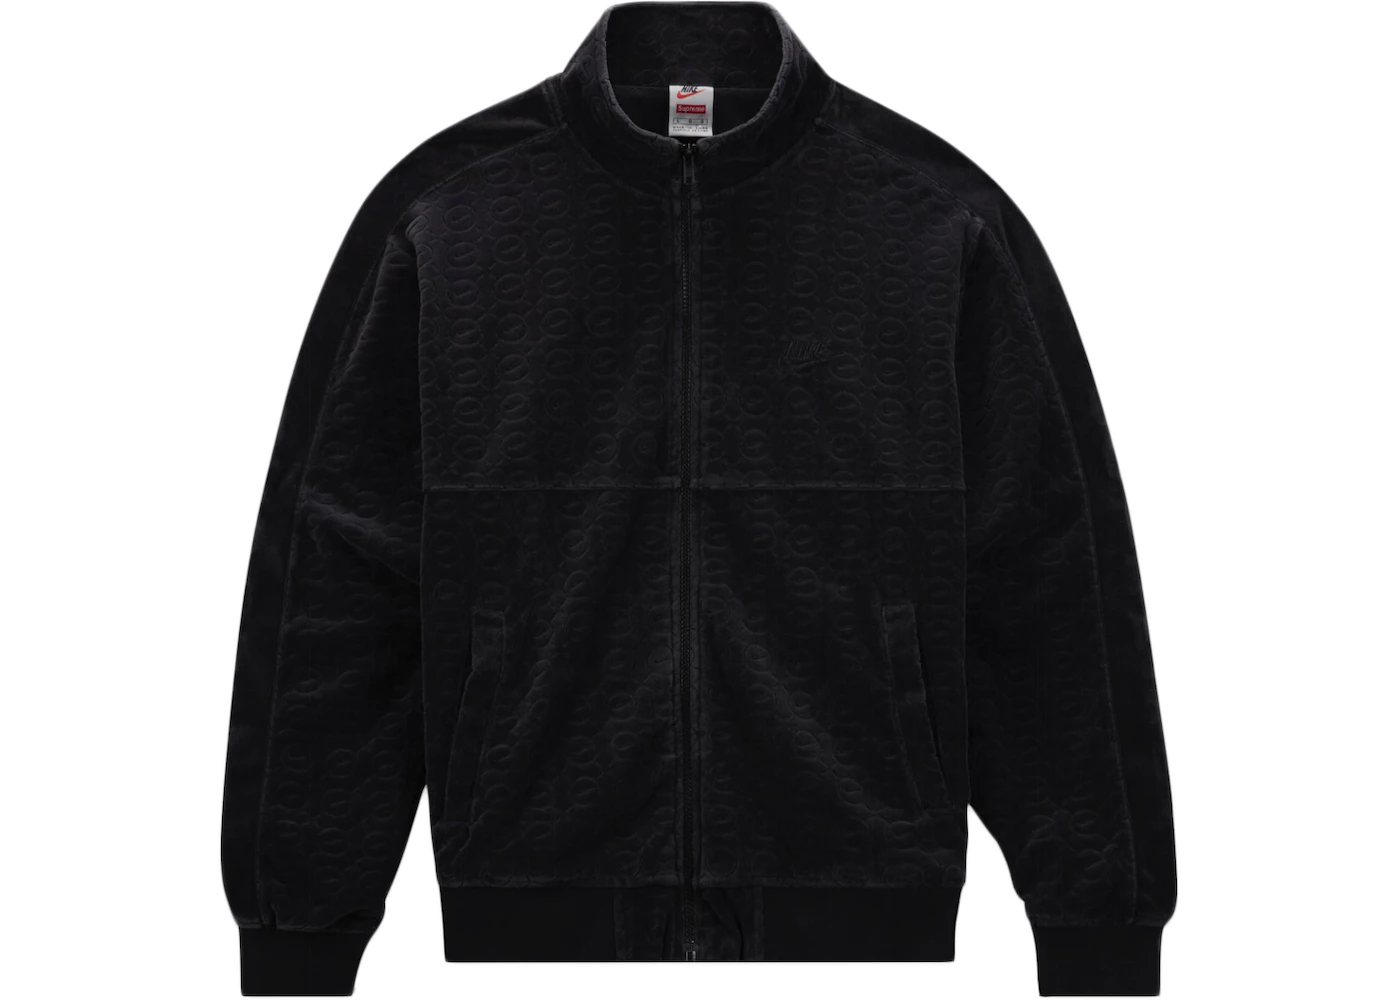 LOUIS VUITTON SUPREME JOGGING SUIT $165  Red leather jacket, Louis vuitton  supreme, Jogging suit